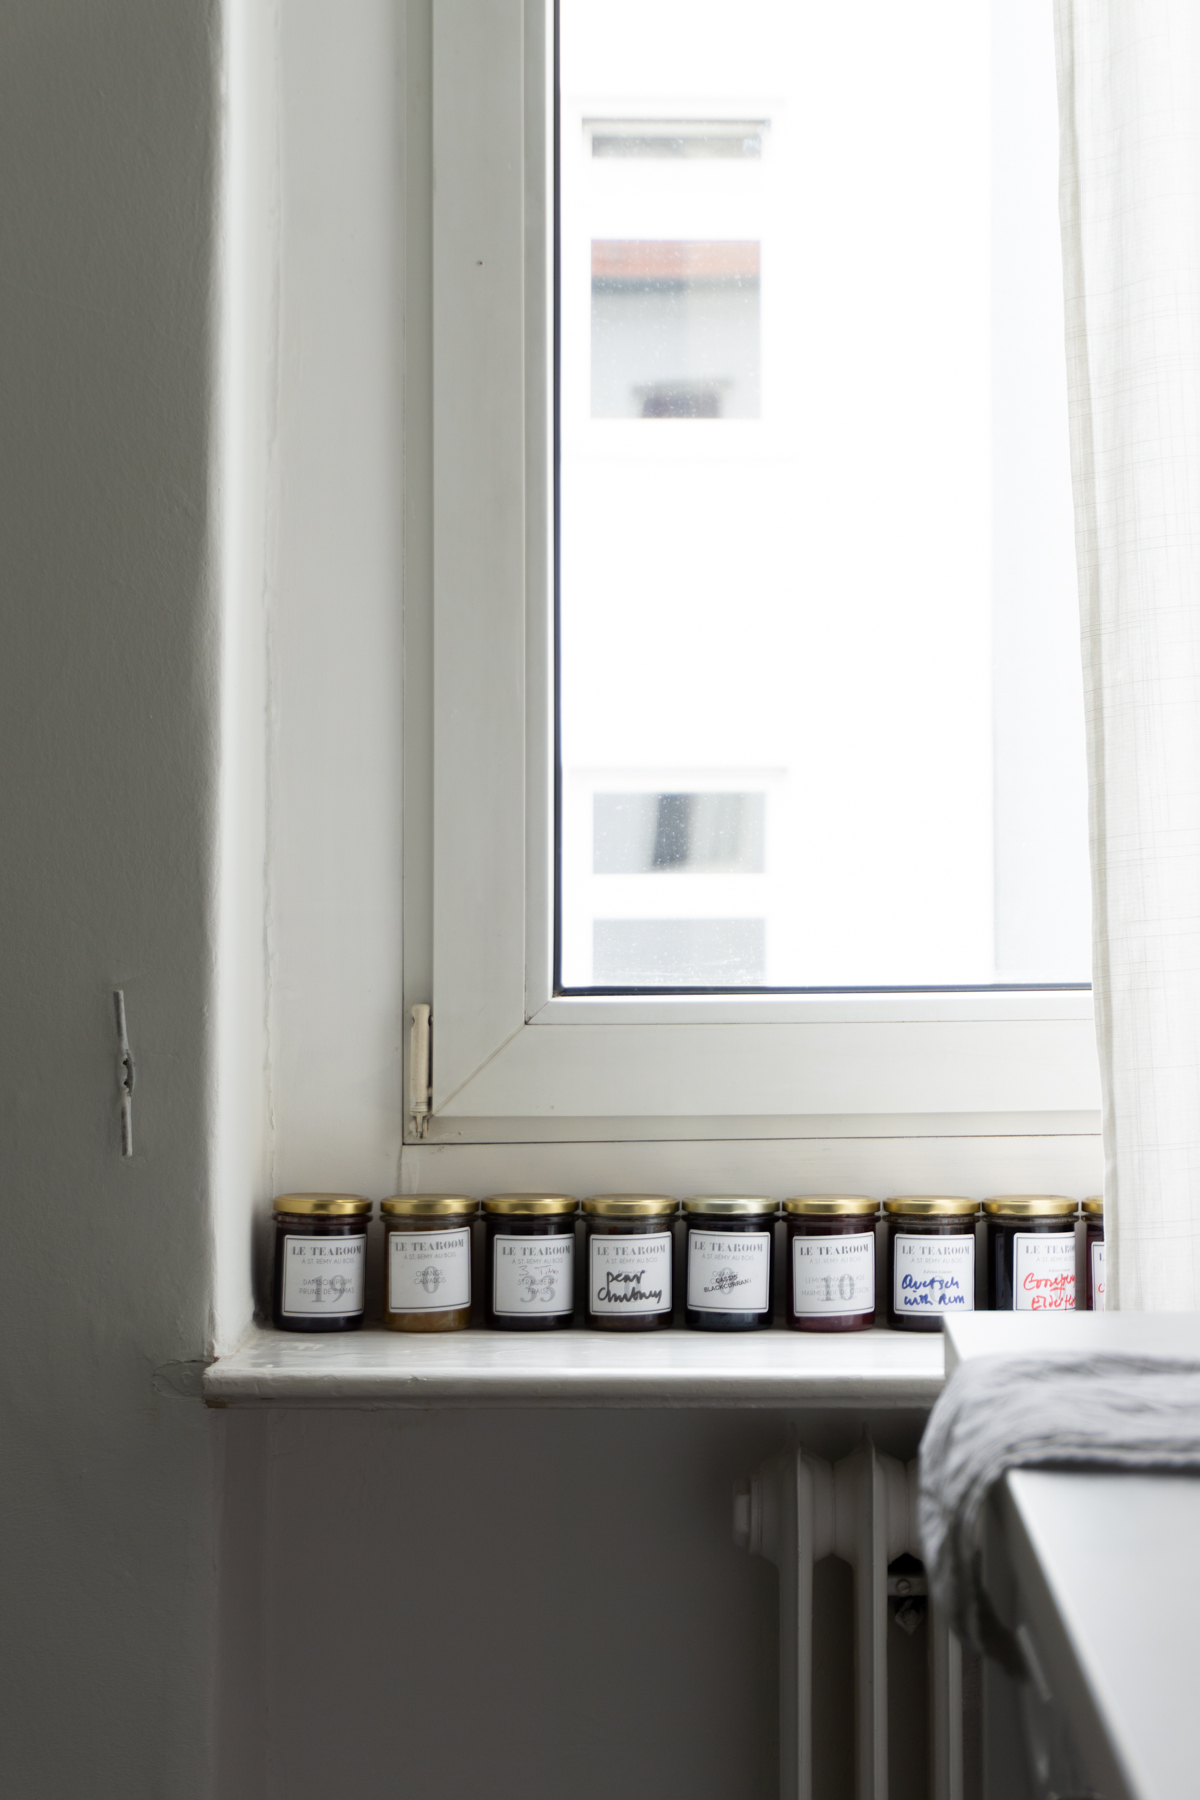 White and Beige Danish Inspired Kitchen | Tea Together Jams on Window - RG Daily Blog, Interior Design